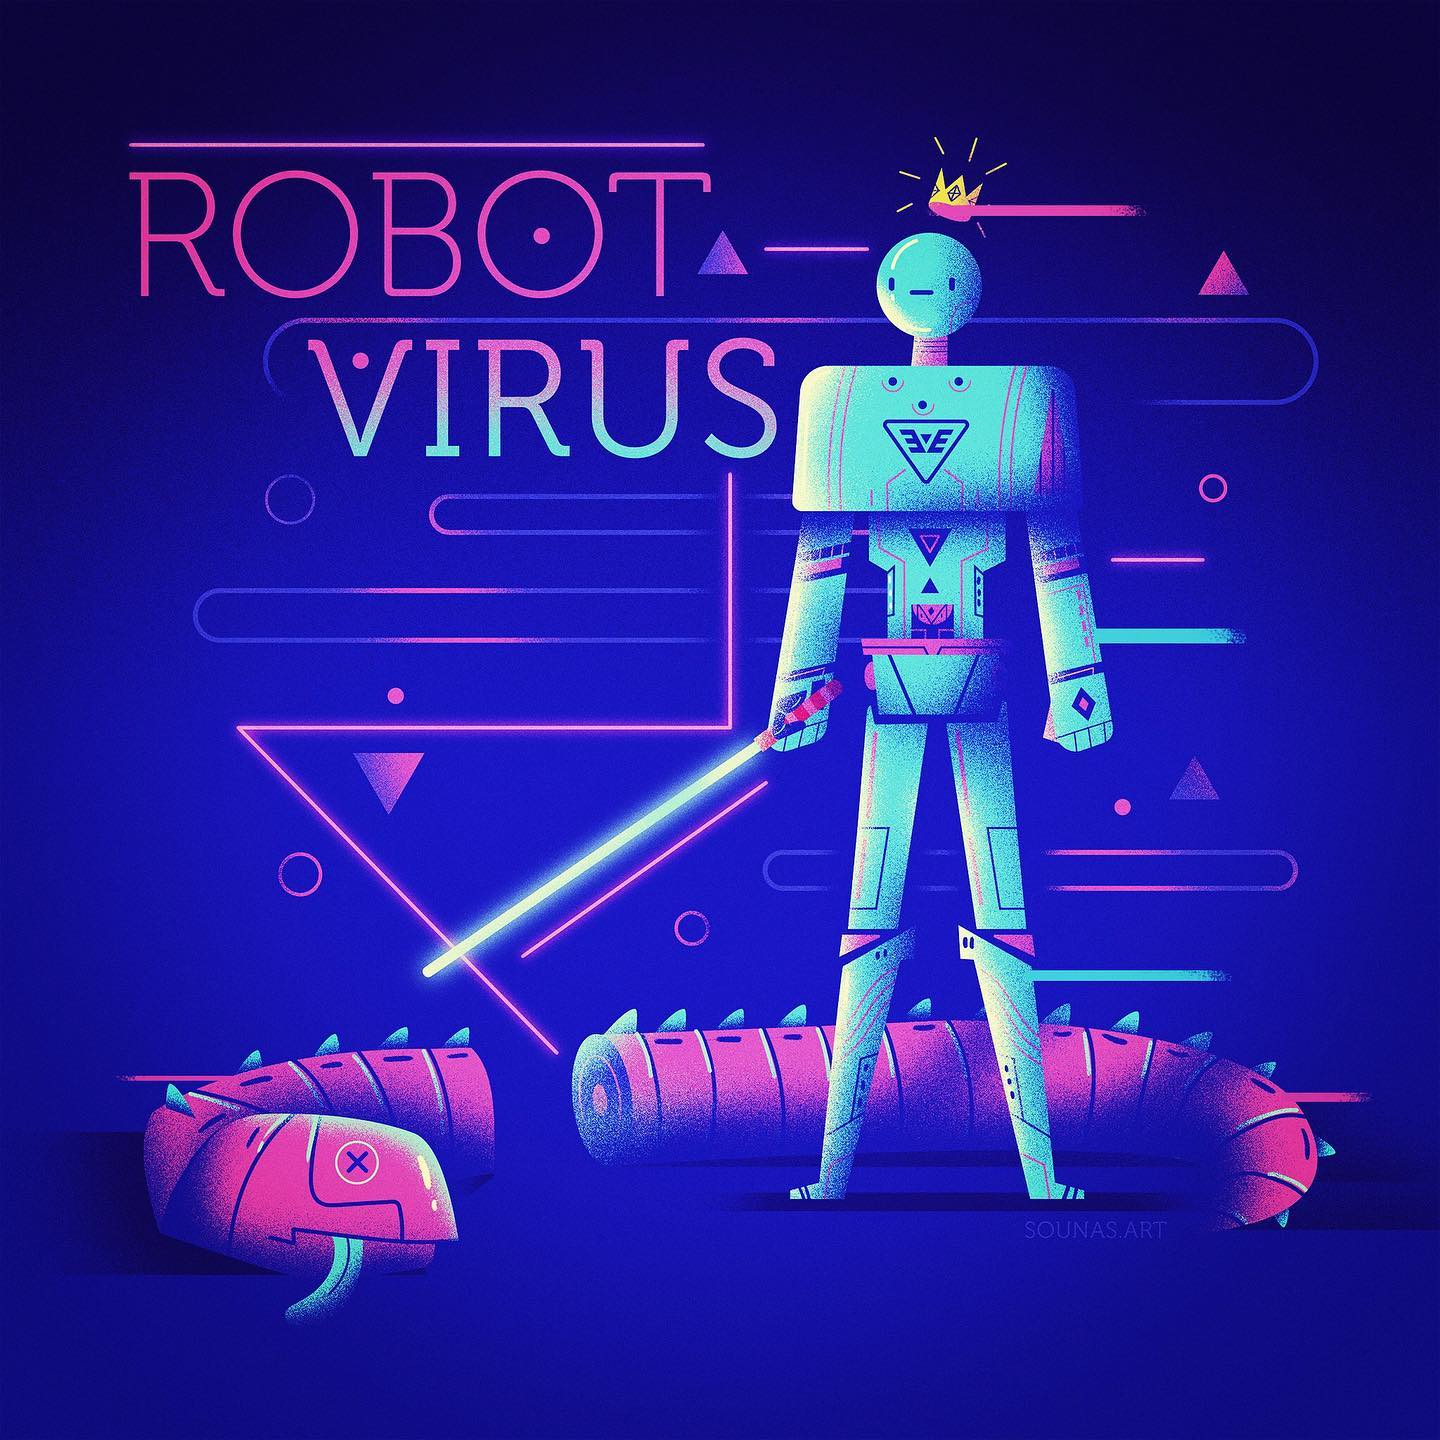 :::Robot Virus - an 80s-style illustration:::..#80s #robot #virus #illustration #arcadegames #dragon #wyrm #worm #neon #lightsaber #εικονογράφηση #vectorart #adobeillustrator #vectorillustration #sounasart #designinspiration #instaart #illustrationoftheday